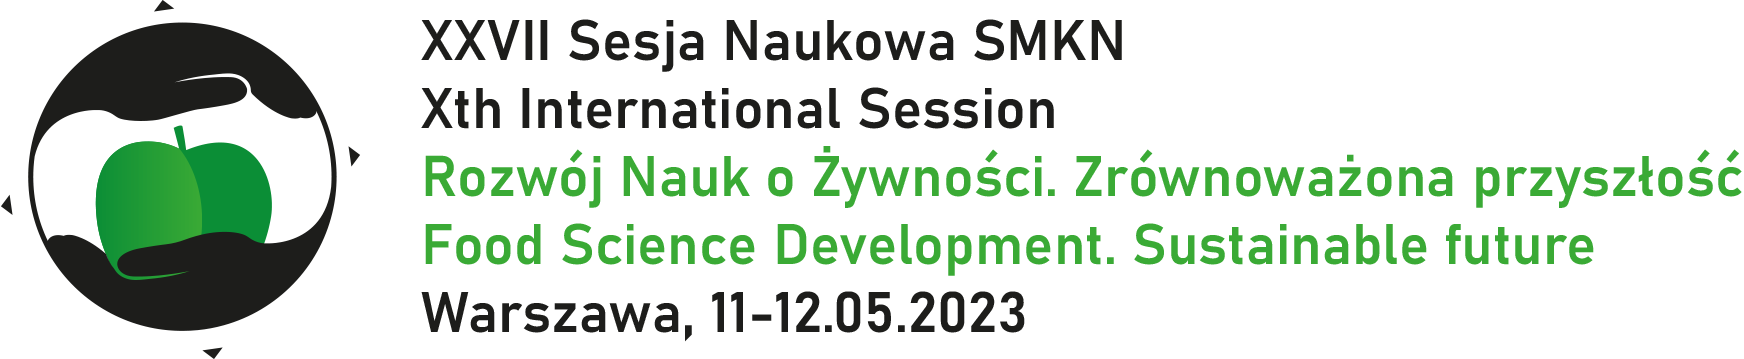 logo konferencja2023 vblack3